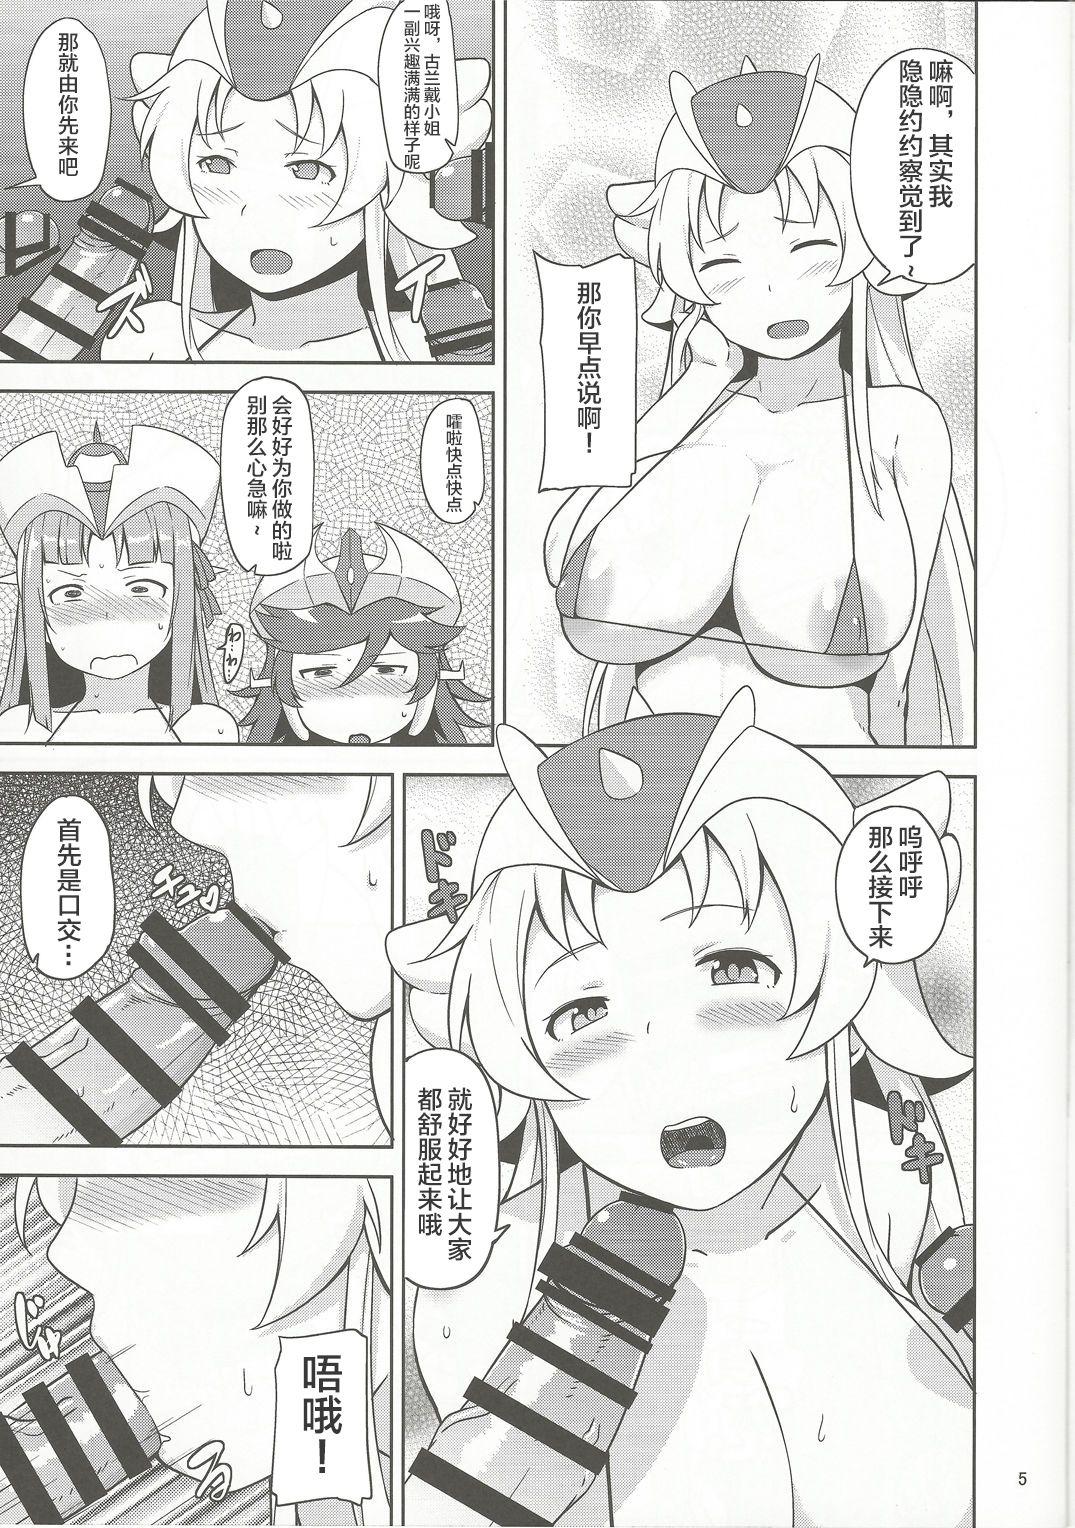 Red RGH - Robot girls z Chudai - Page 4